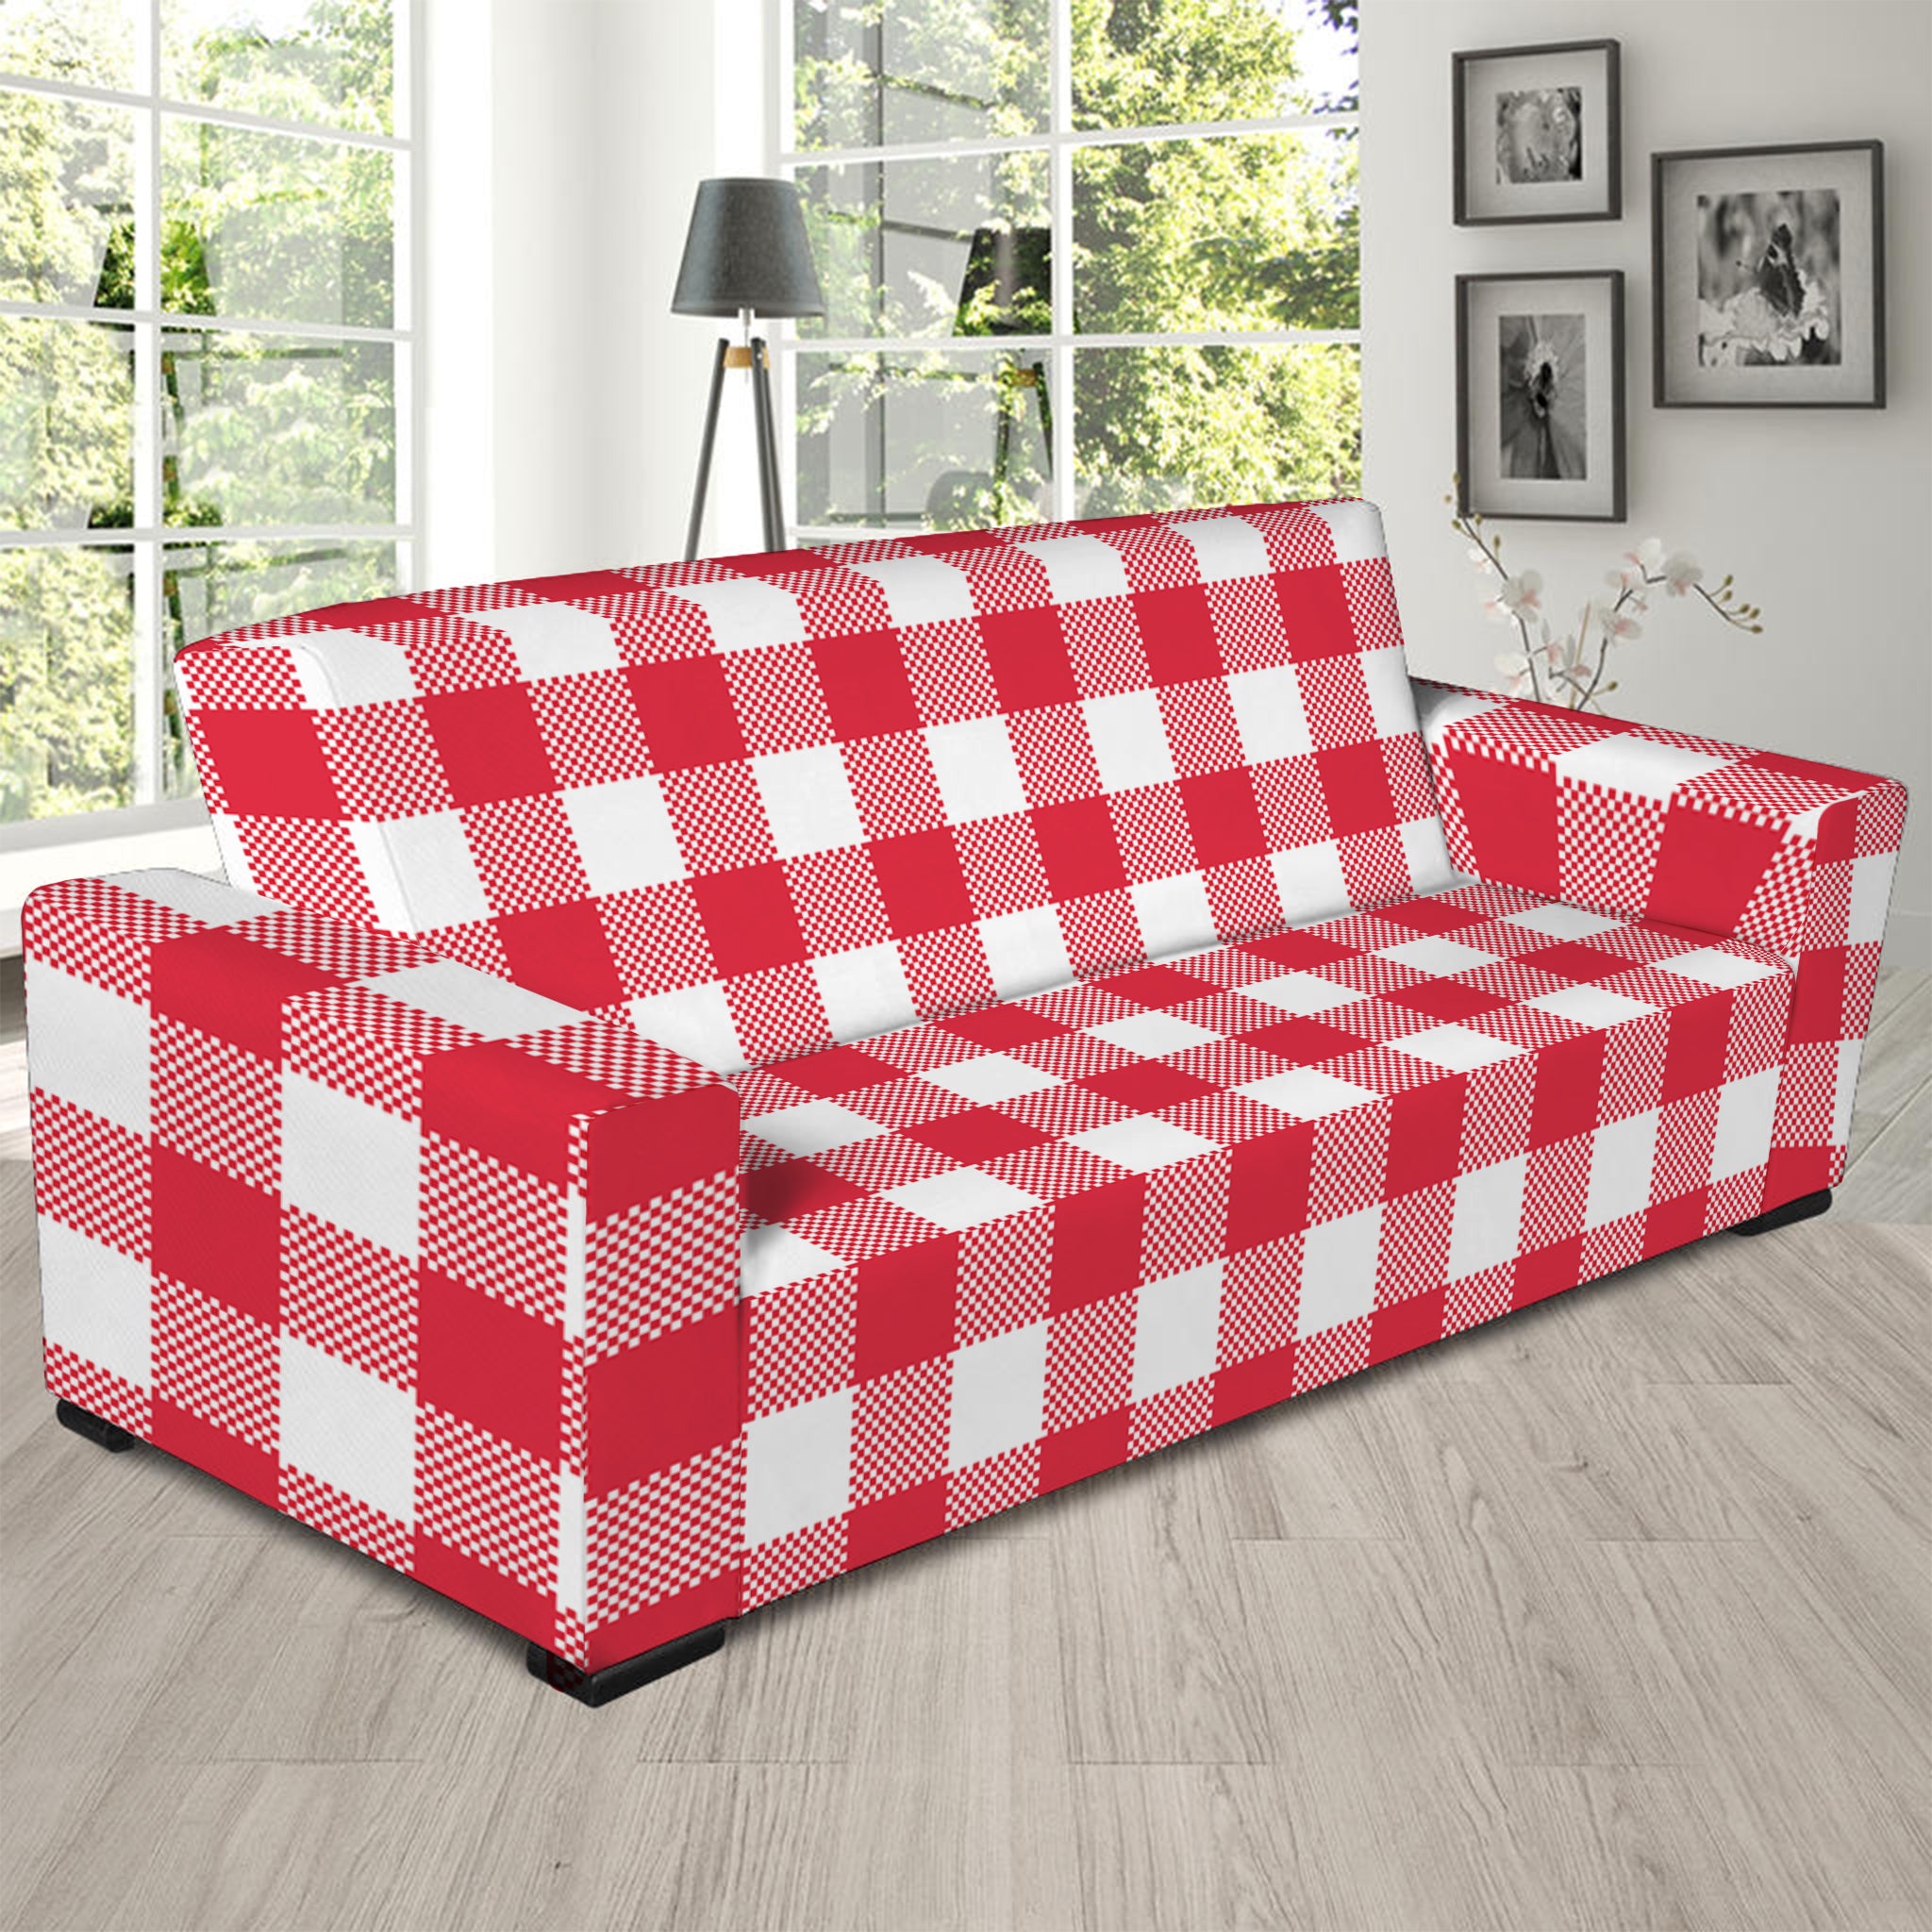 Raspberry Red And White Gingham Print Sofa Slipcover